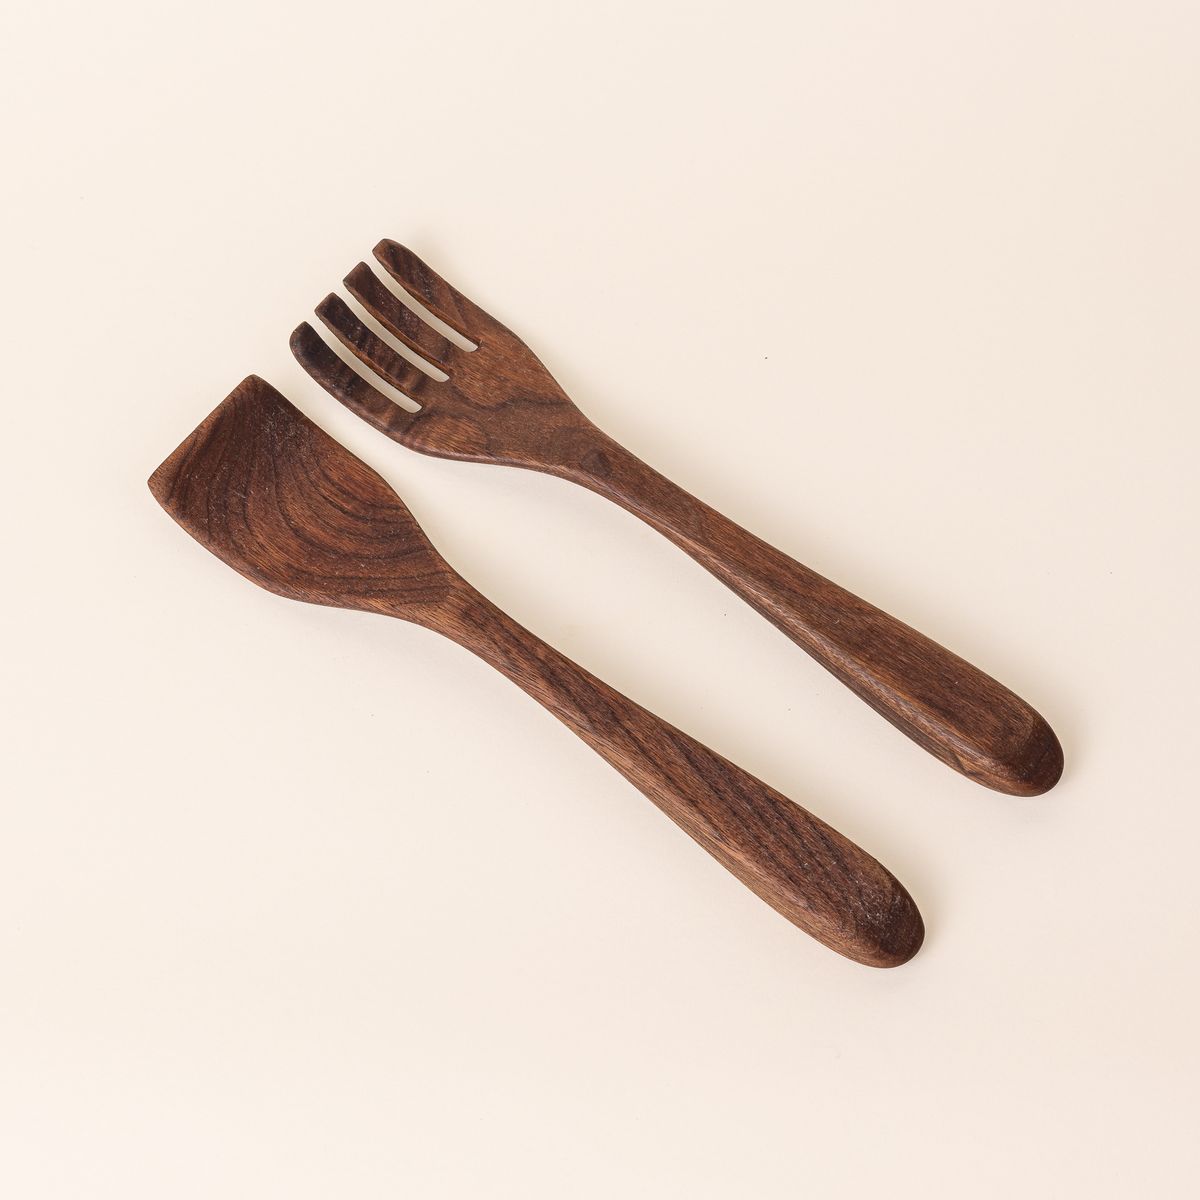 Two long walnut wood serving utensils. The left utensil has a shape like a spatula, the right has a shape like a fork.